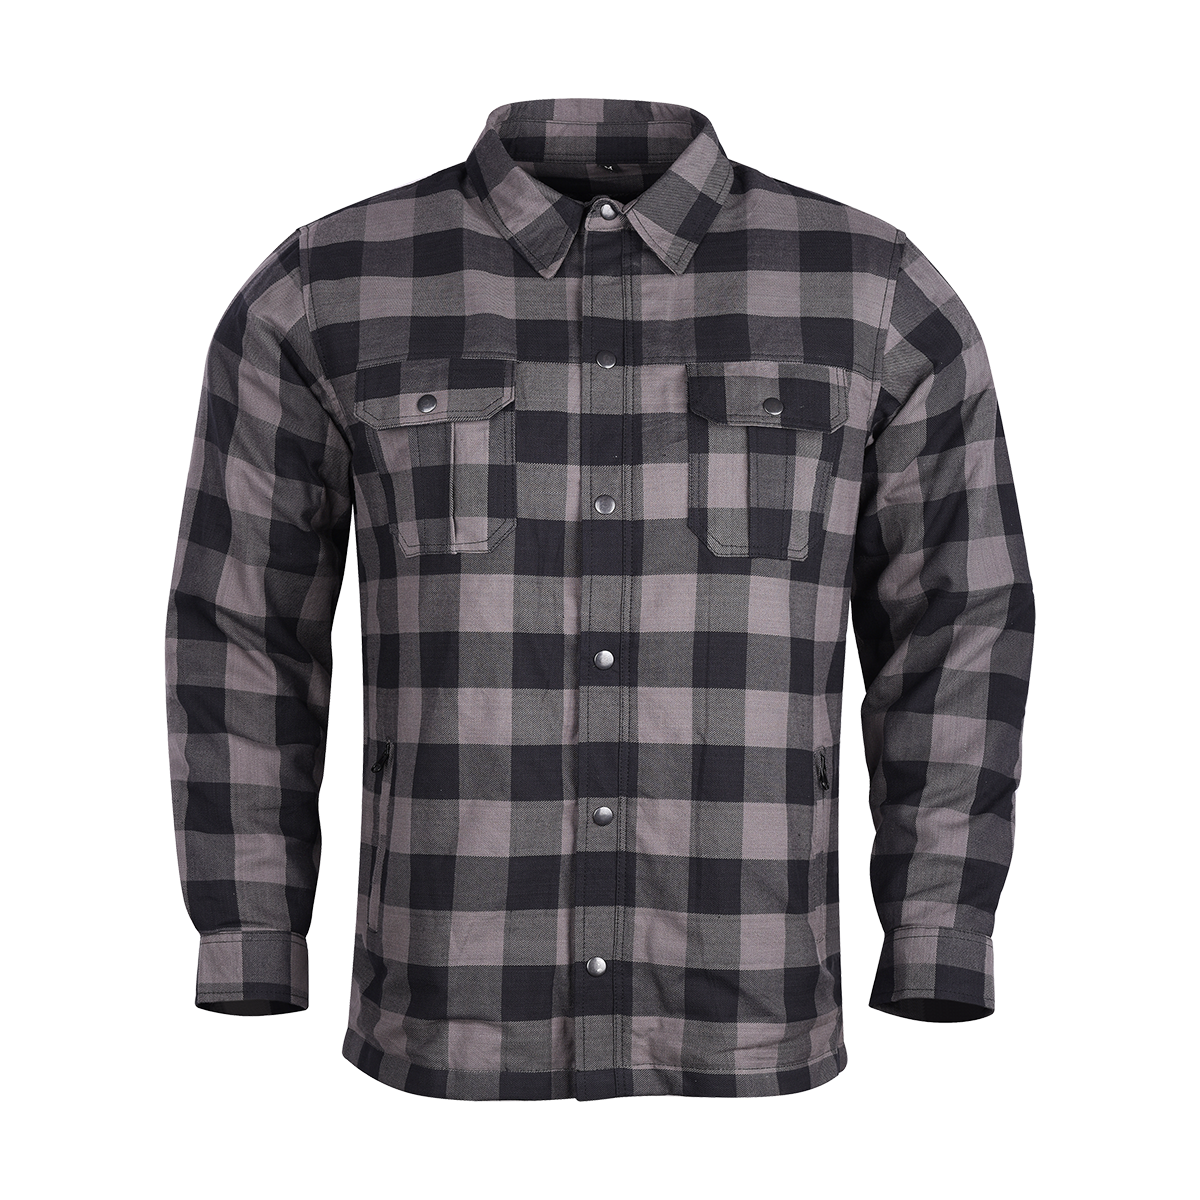 Vance Leathers USA’s Riding Shirts w/ Kevlar, Waterproof Zippers & Optional C.E. Armor